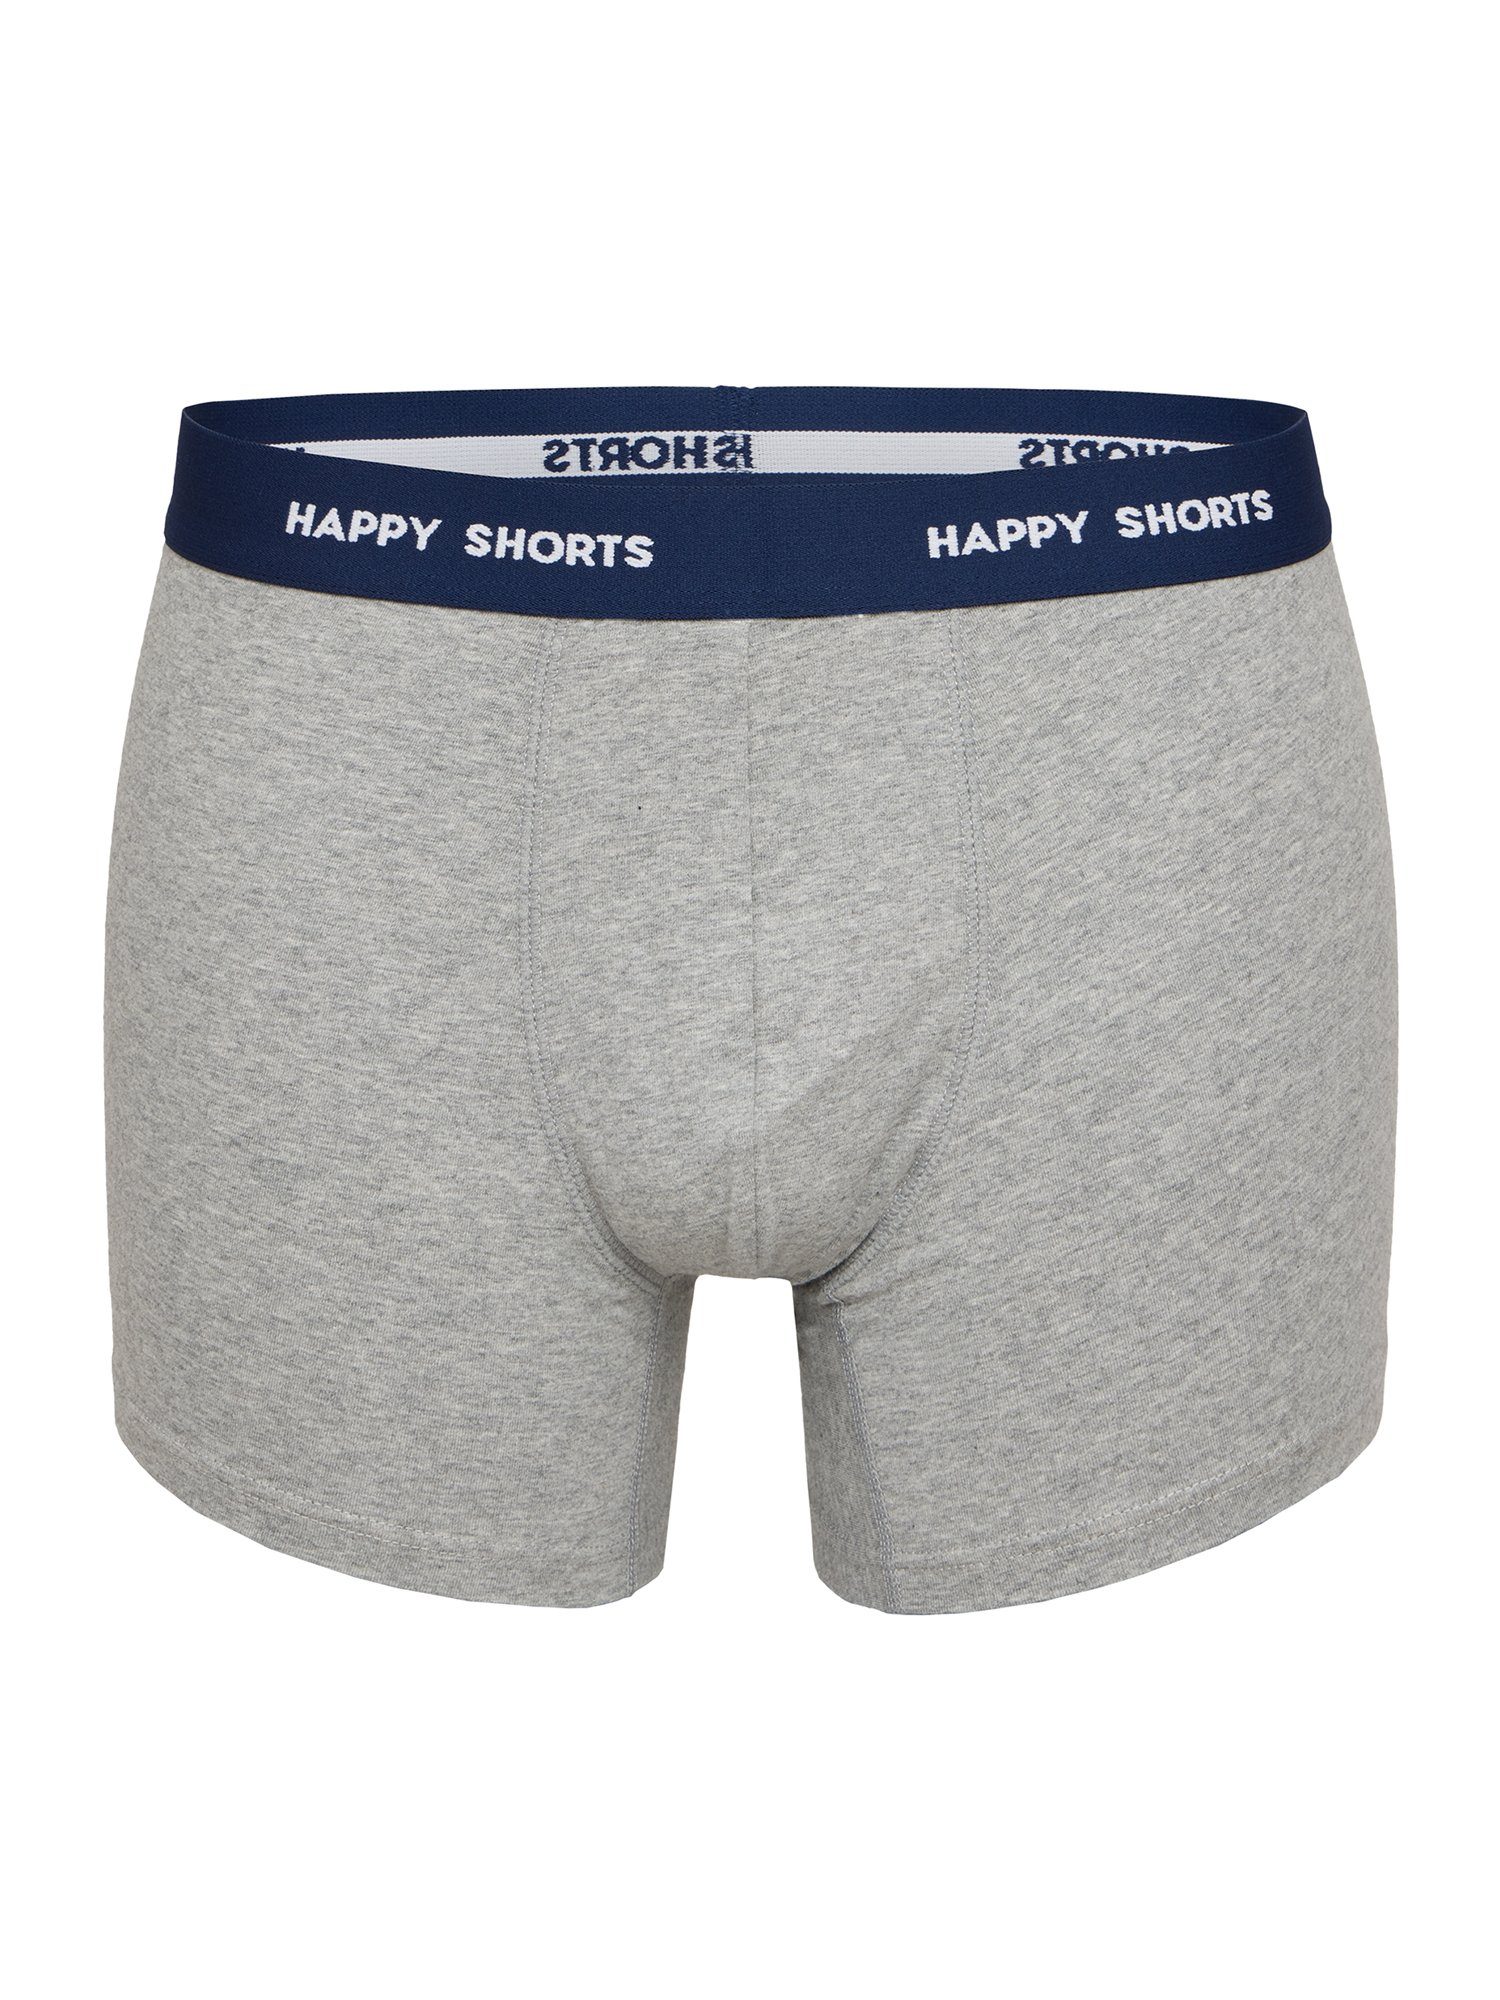 Retro Pants Cookies Retro-Boxer unterhose HAPPY SHORTS Retro-shorts XMAS (2-St)